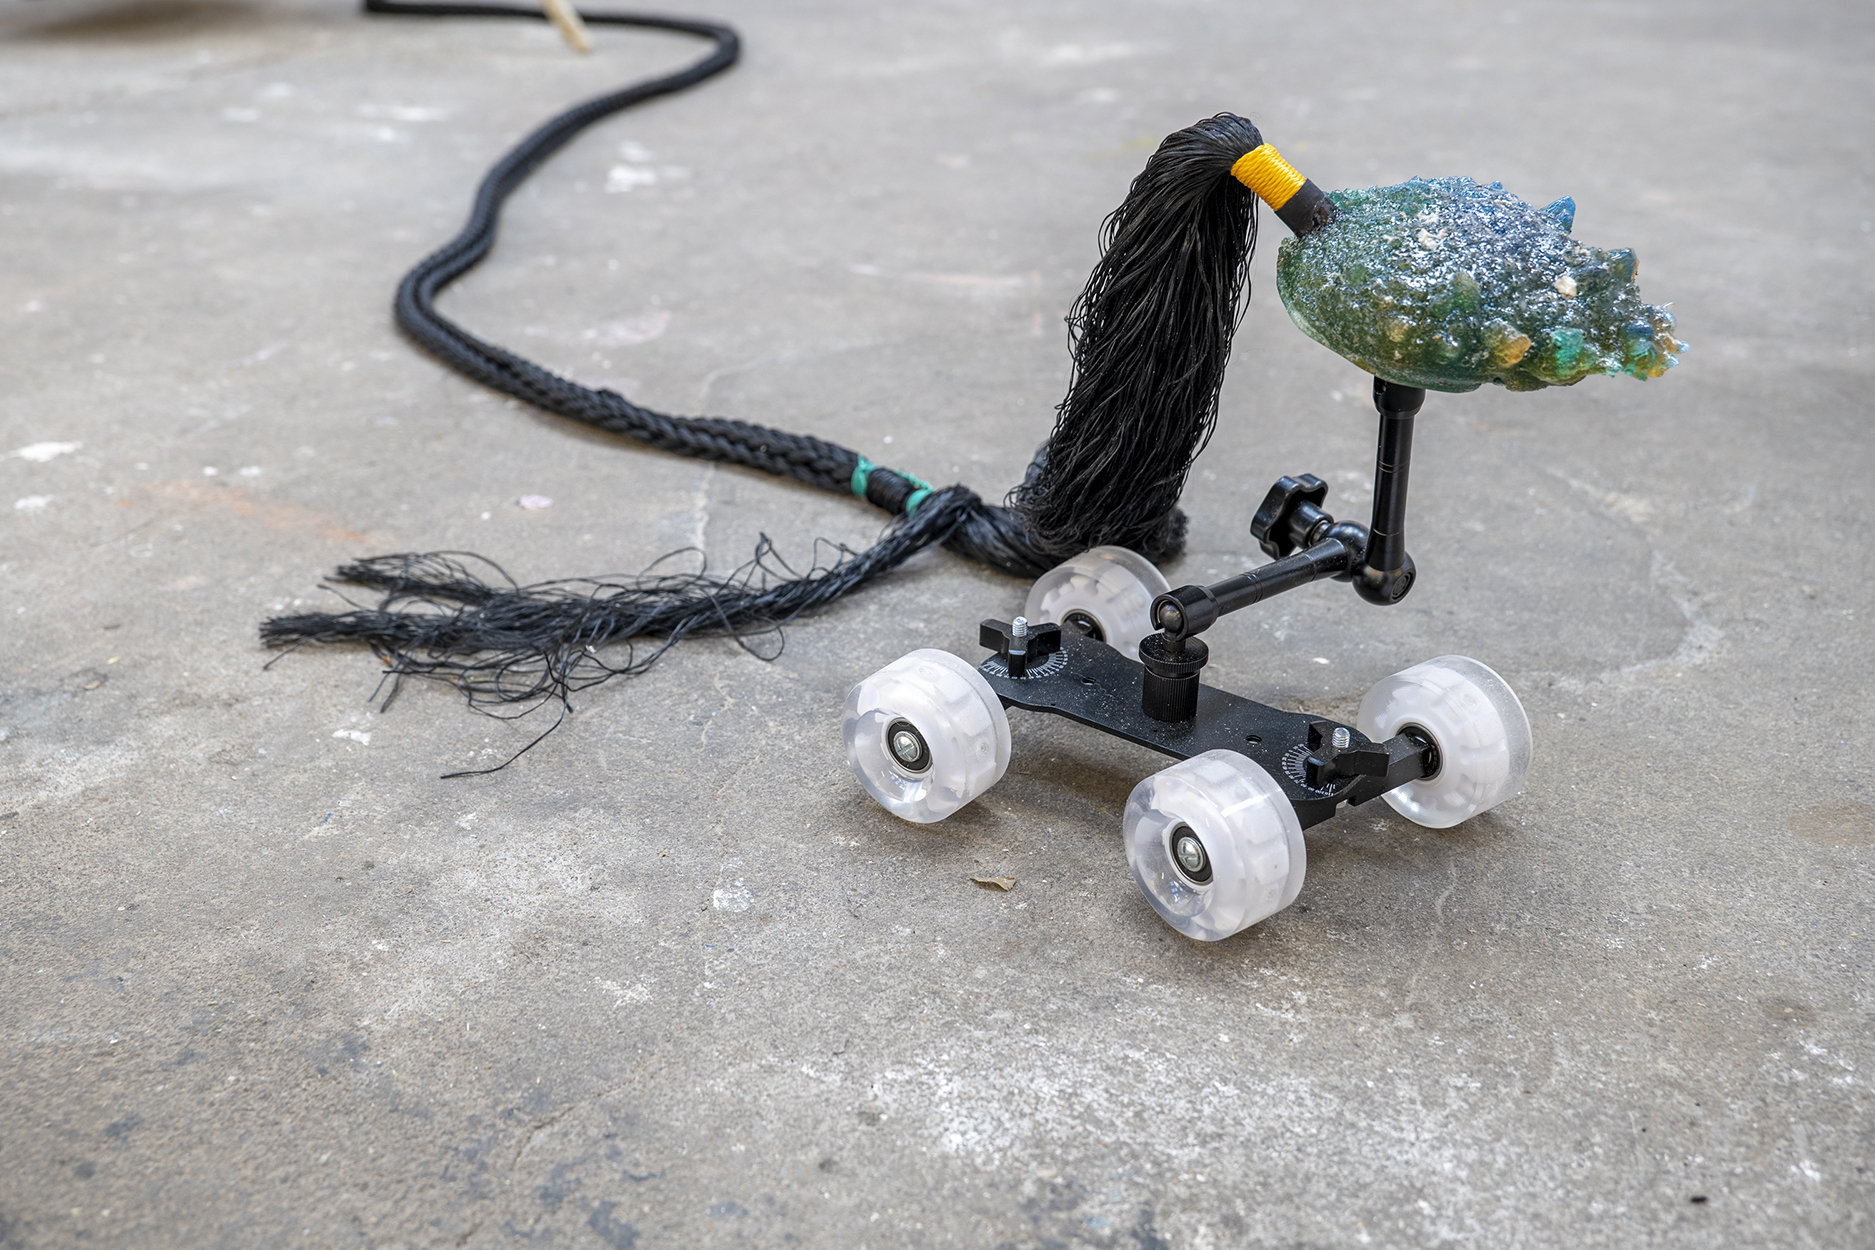 Guillaume BARONNET, Hétéroclite Hérésie Normative, 2021, résine époxy, pigments, mini dollies, roues de skateboard